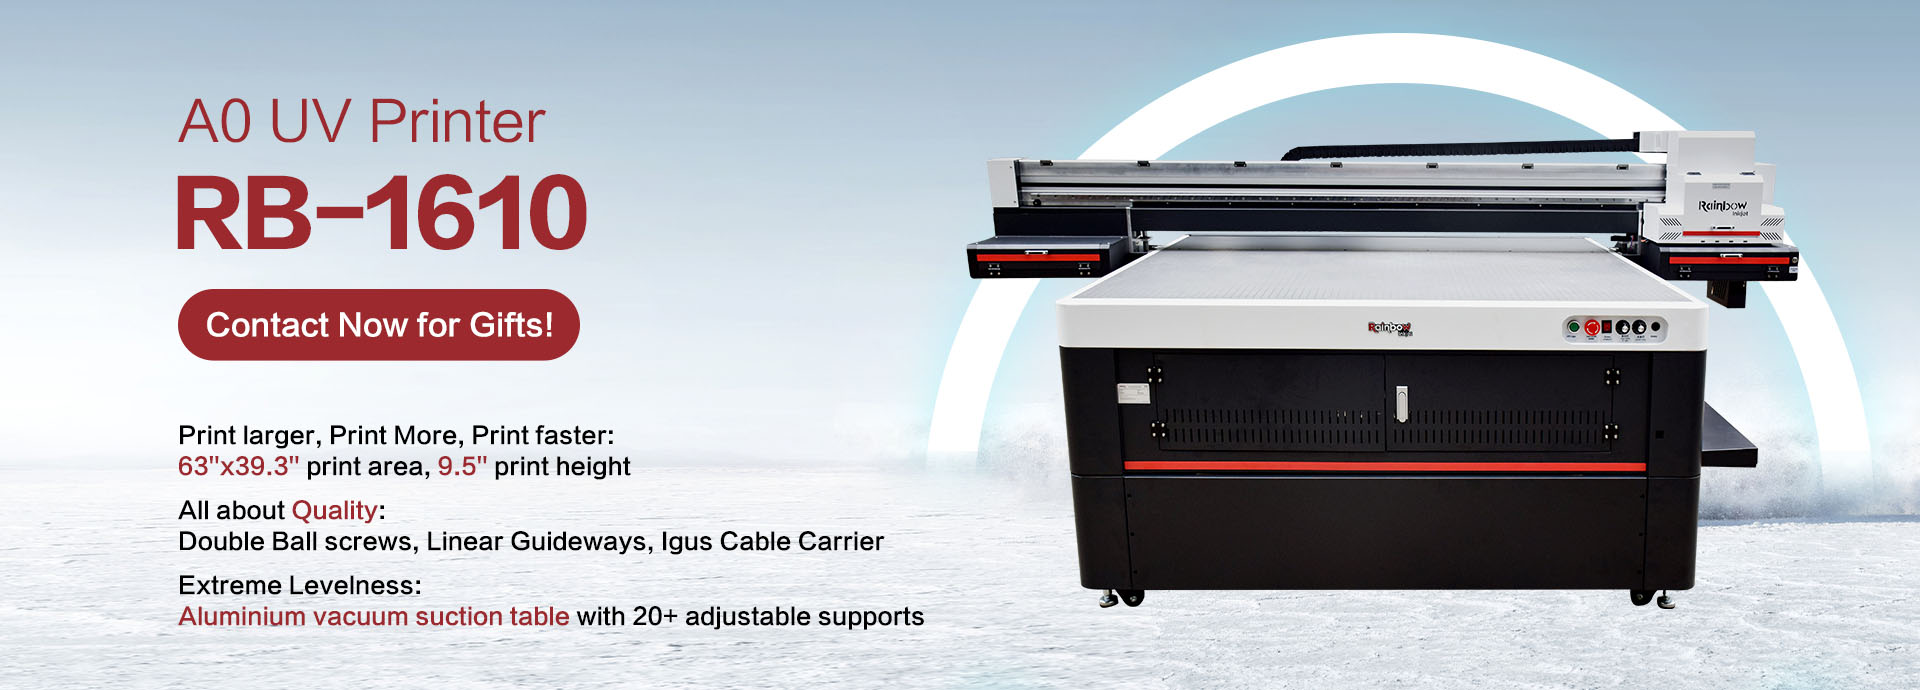 Printer flatbed 1610 a0 uv